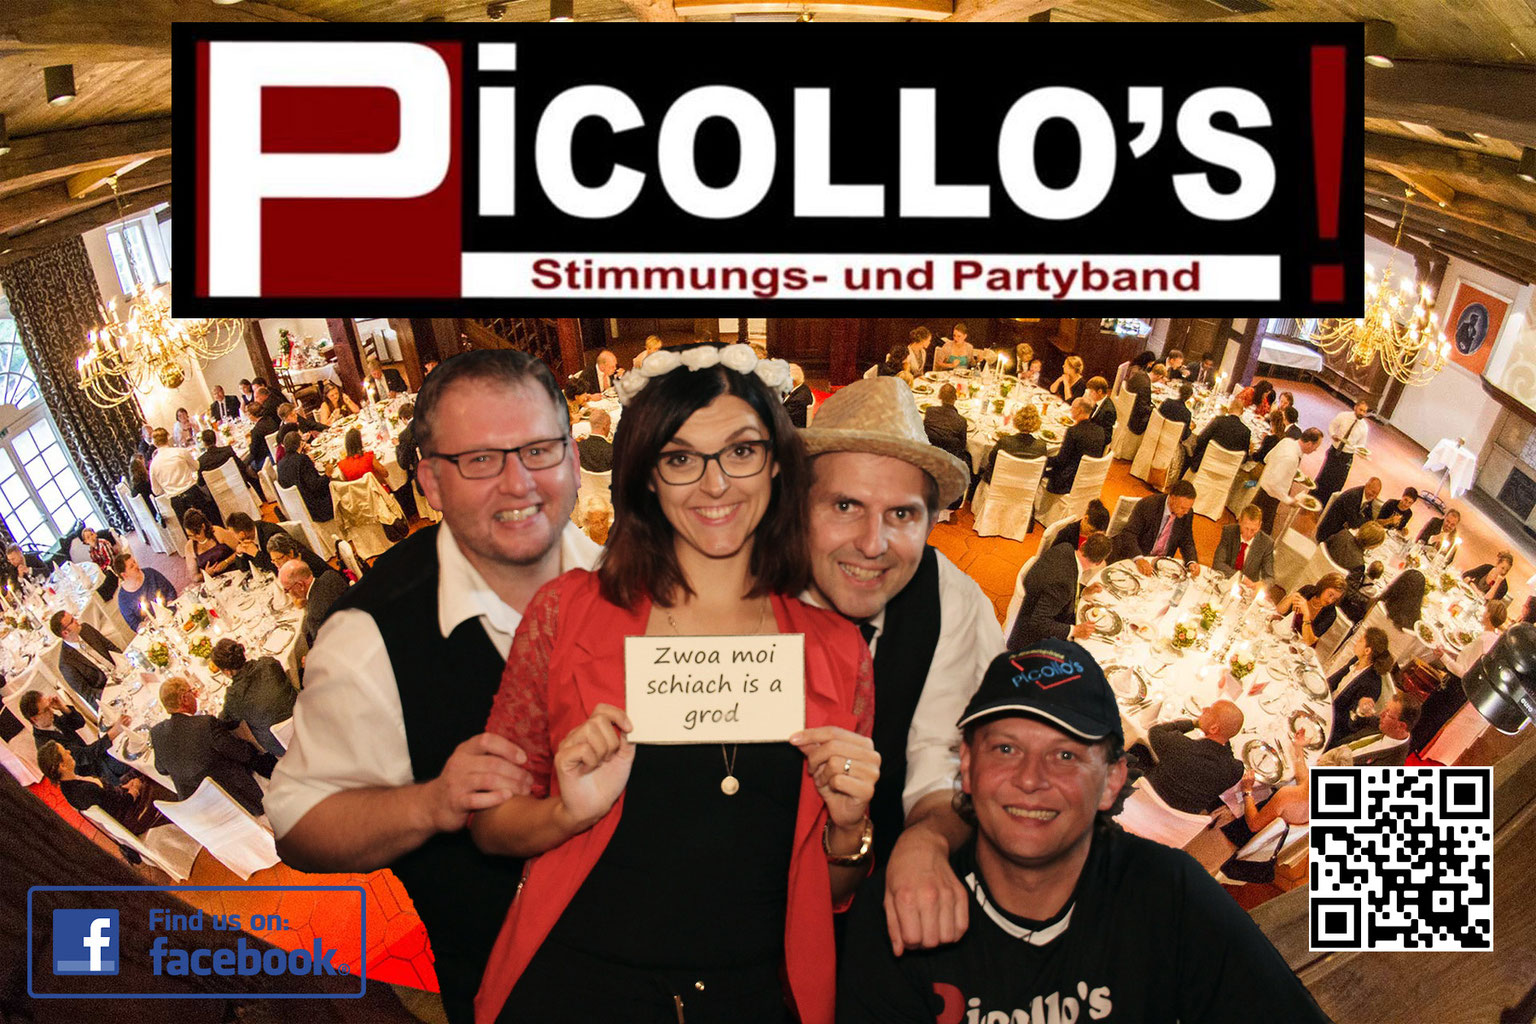 (c) Picollos.com